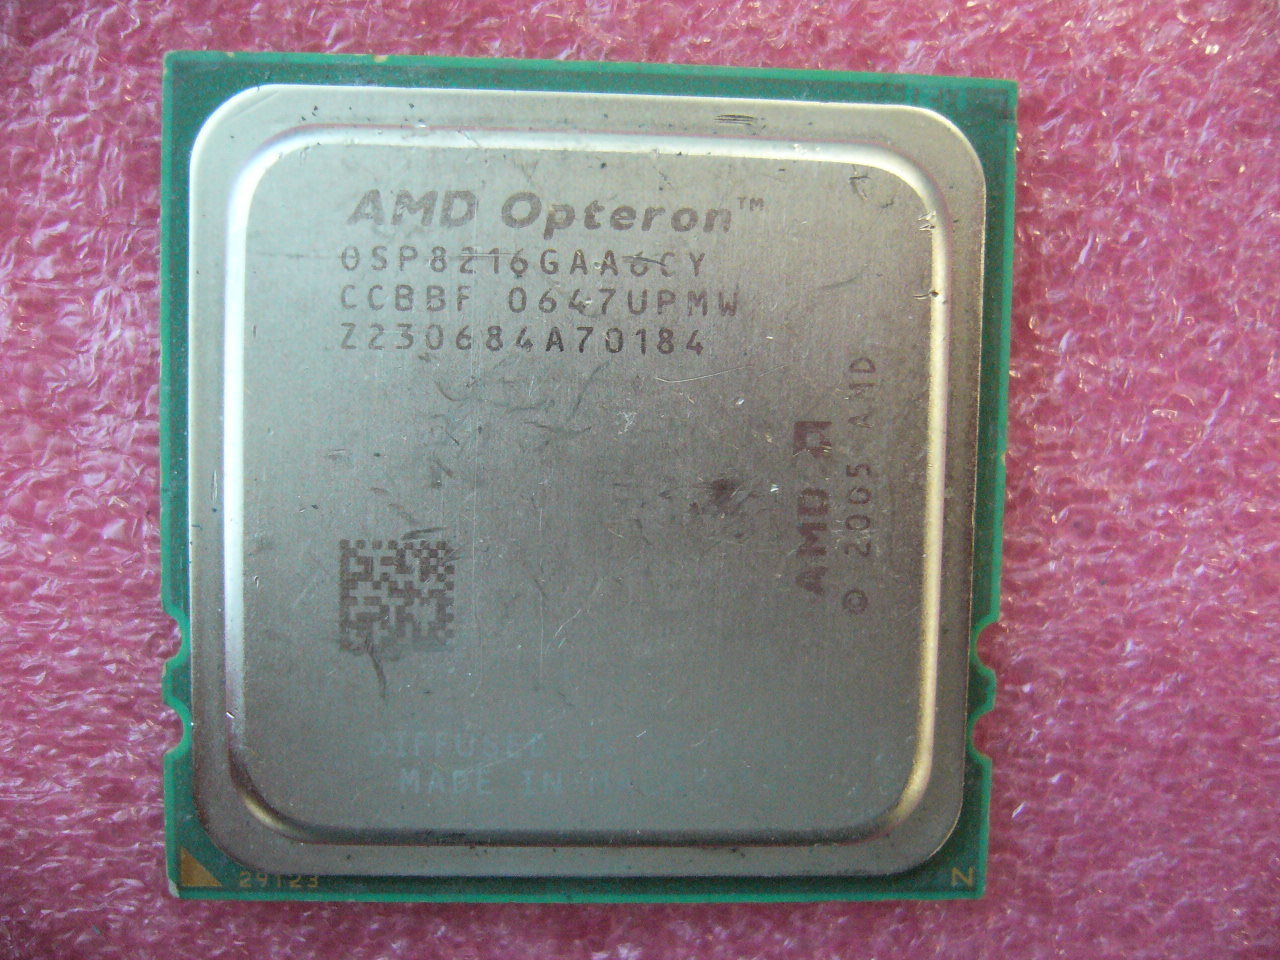 QTY 1x AMD OSP8216GAA6CY Opteron 8216 2.4 GHz Dual Core CPU Socket F 1207